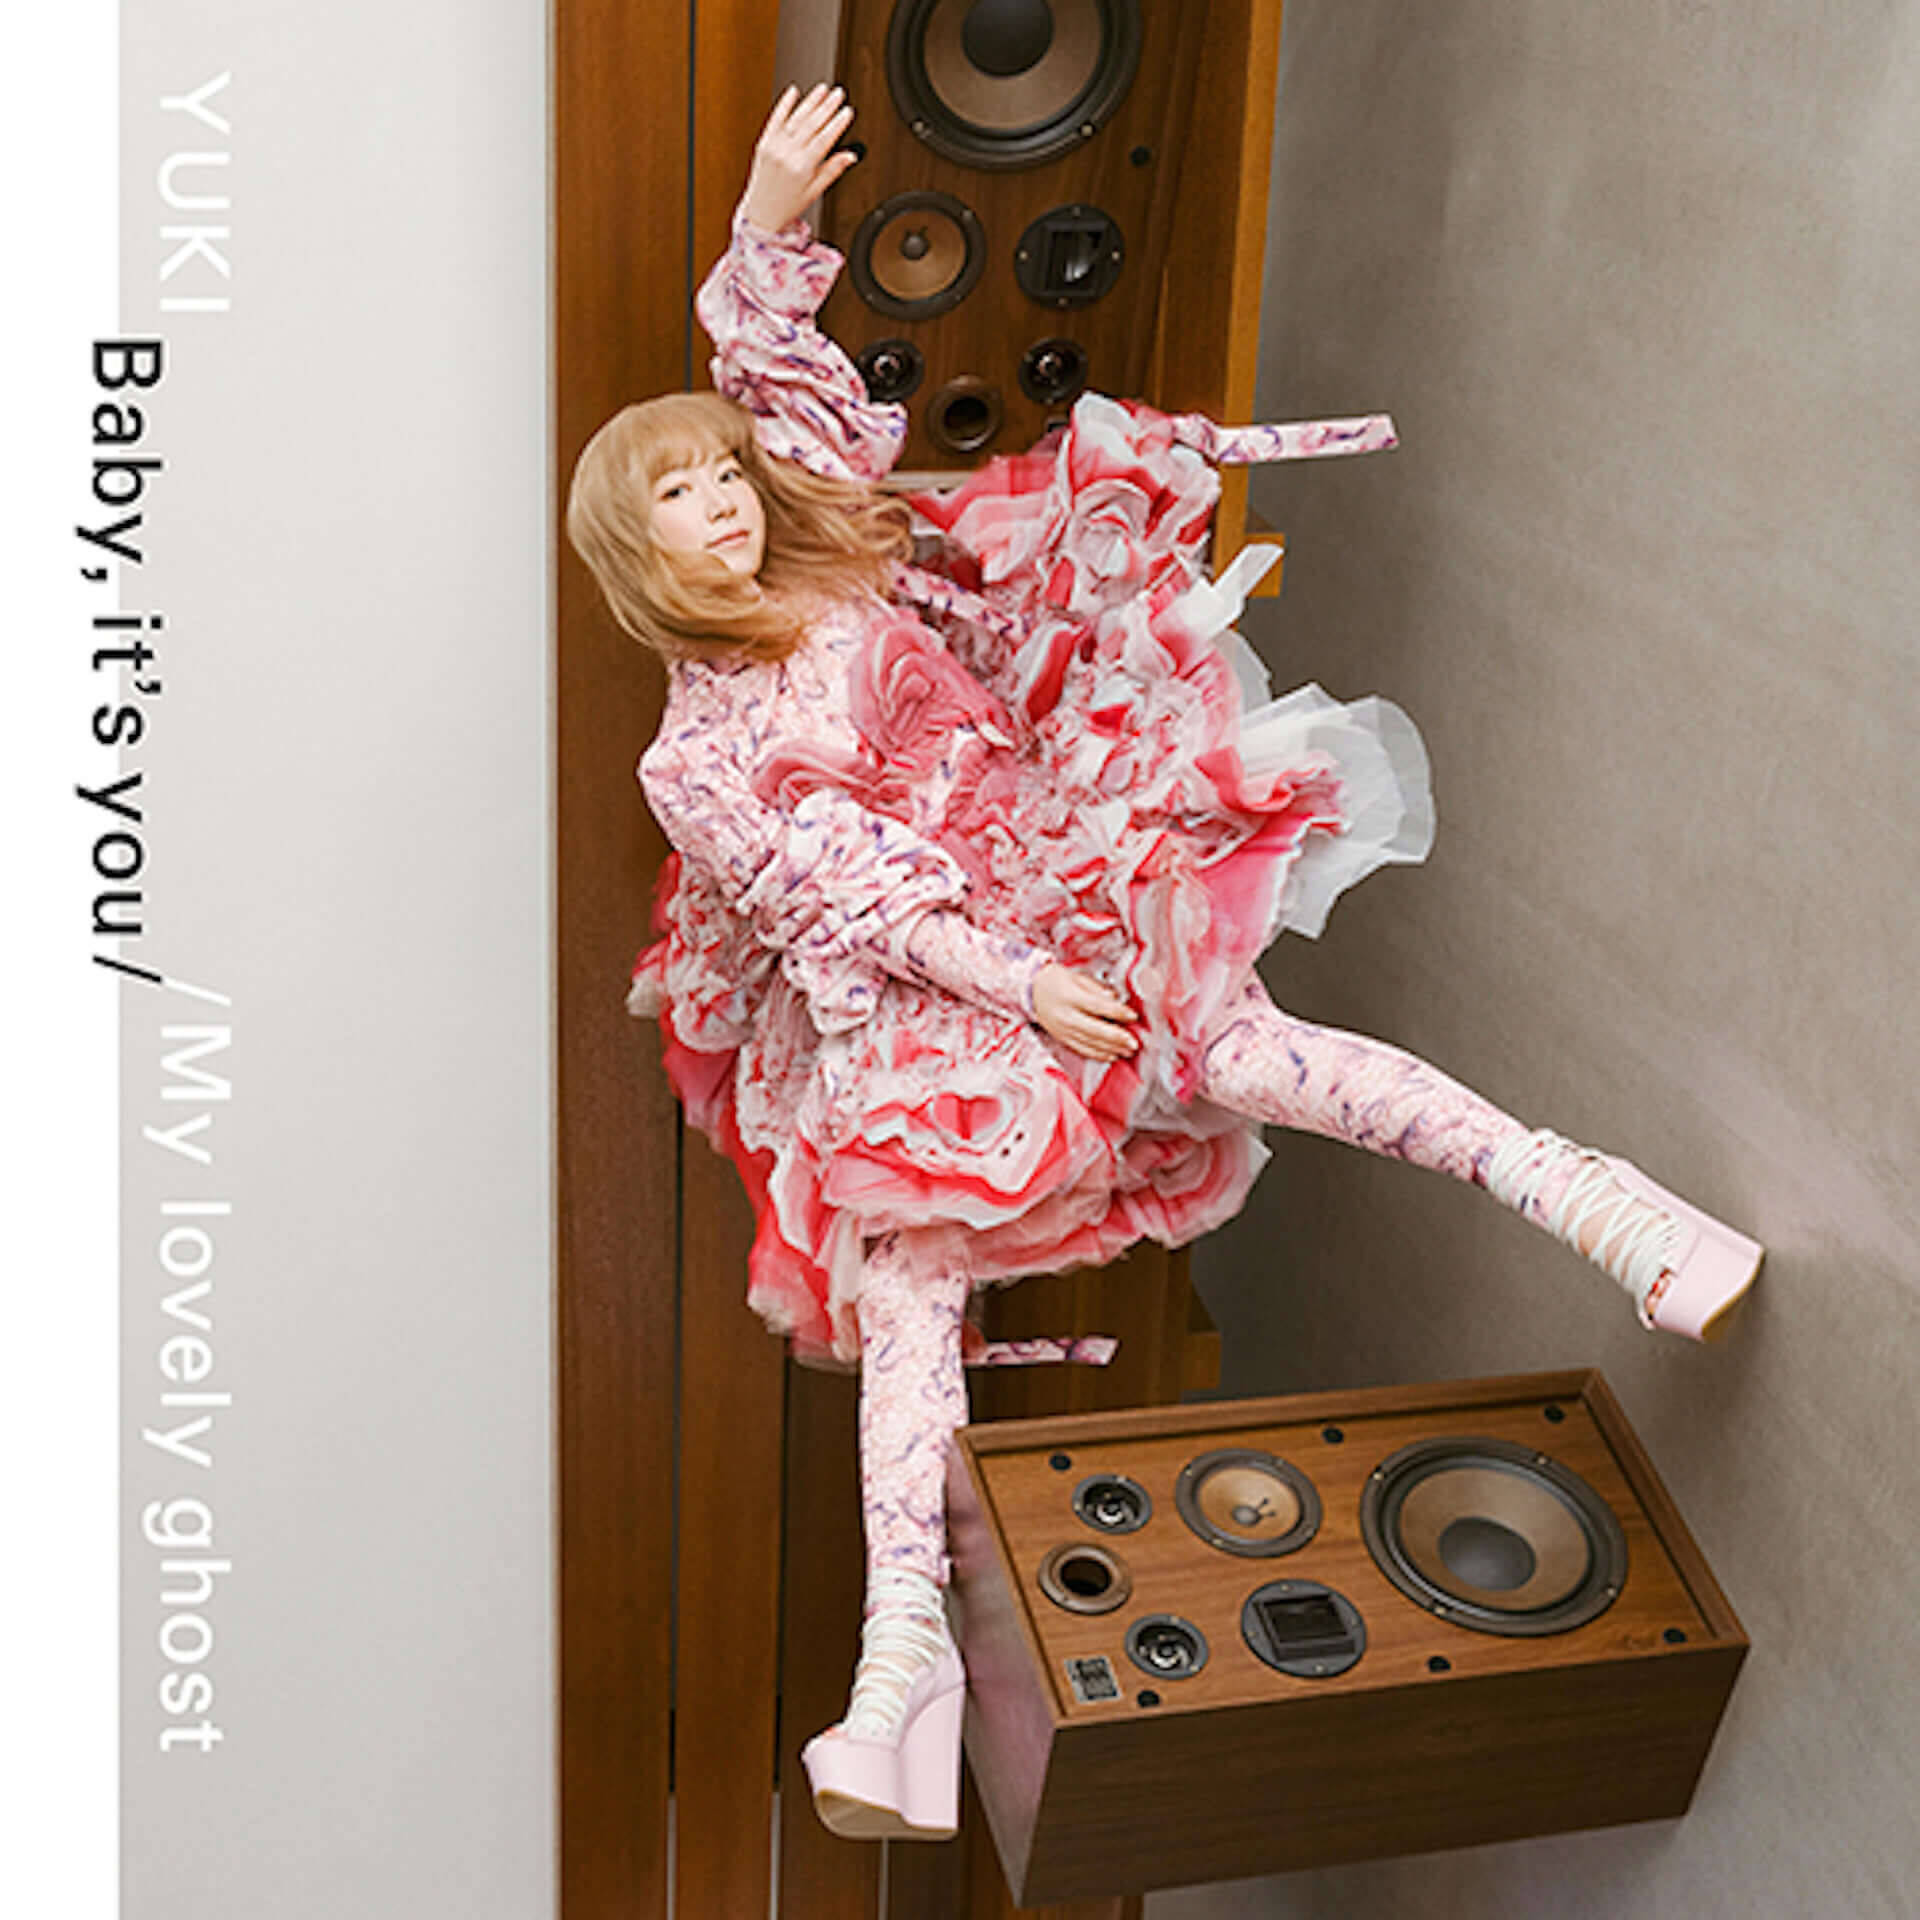 YUKI最新アルバム『Terminal』のジャケット写真＆収録曲が公開！初回盤DVDには新曲“Baby, it’s you”MVも収録